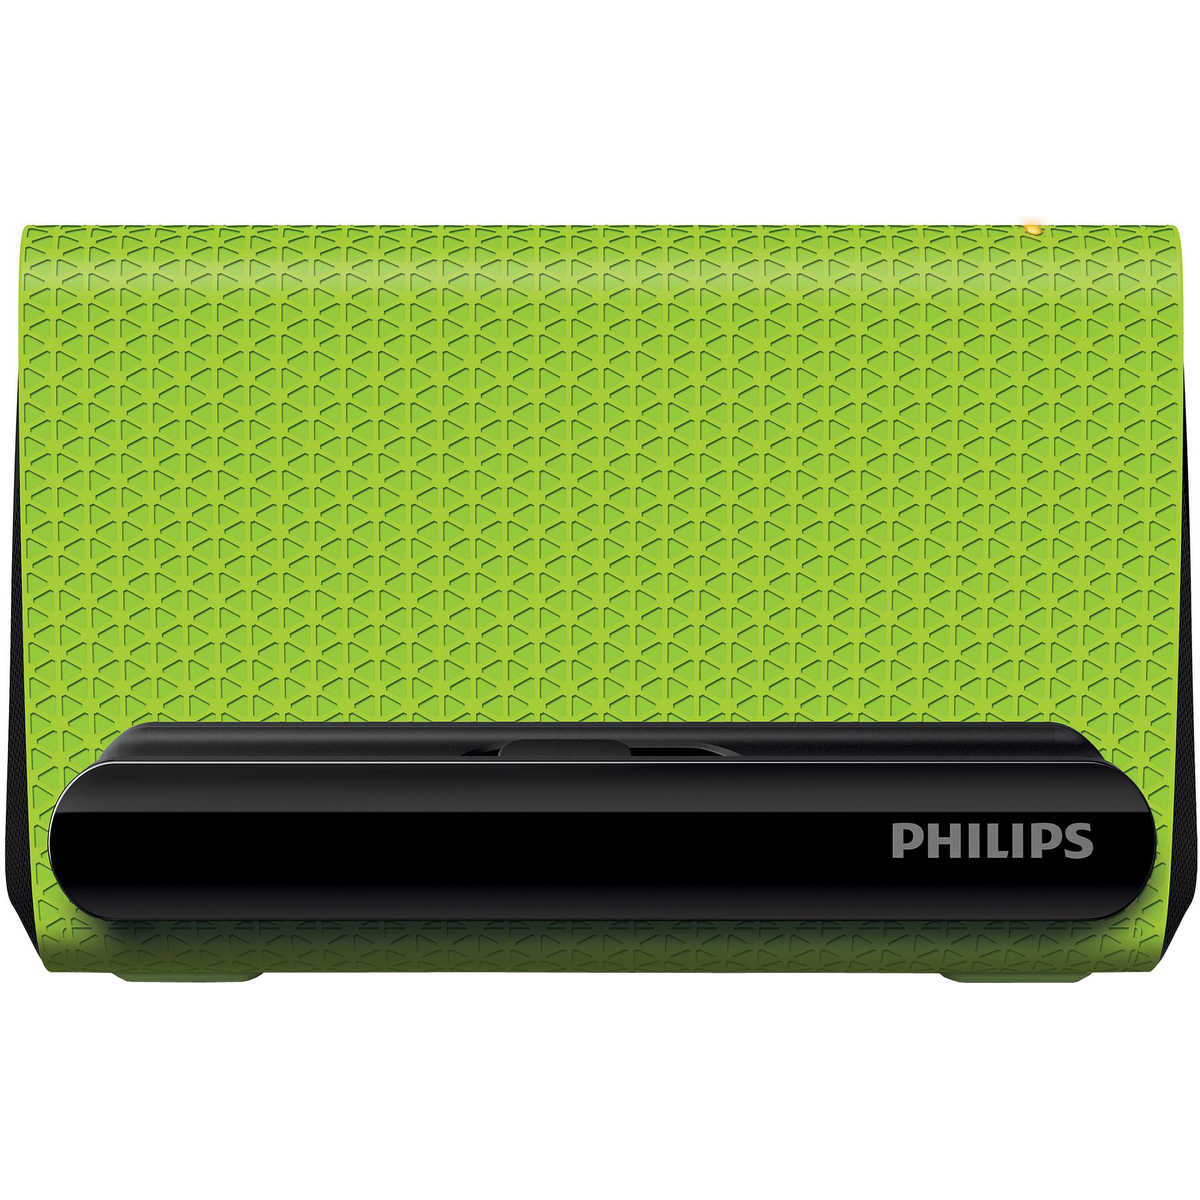 Филипс зеленый. Портативная акустика Philips sba1710. Philips SBA Green. Портативная колонка Philips. Колонки Philips SBA 1520.